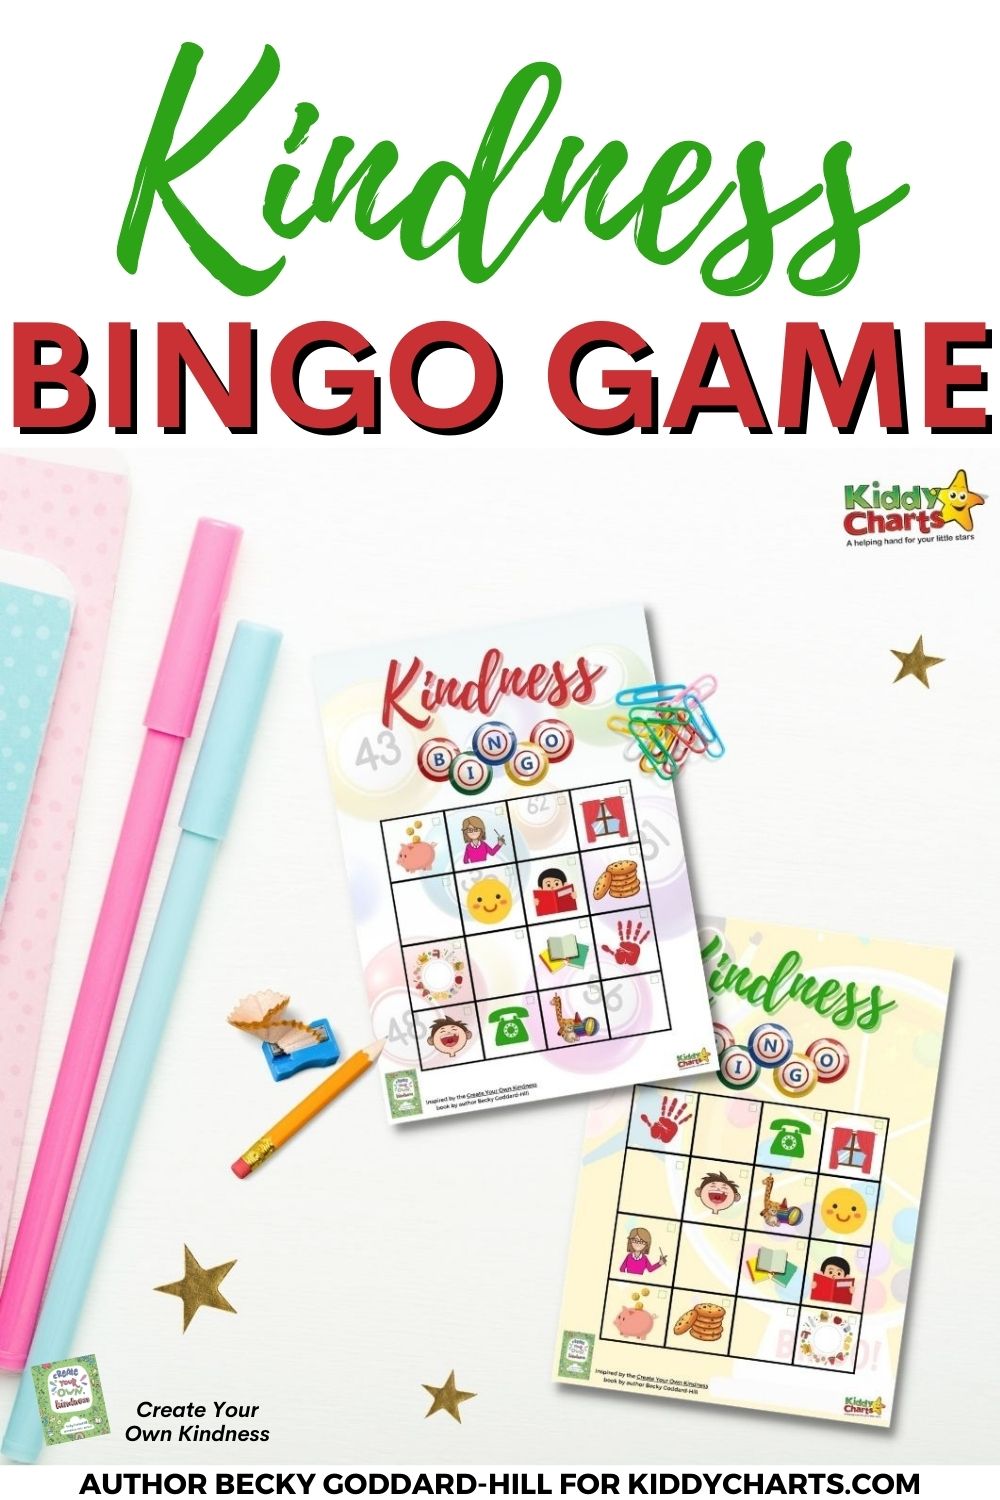 kindness-bingo-game-is-fun-for-all-kiddycharts